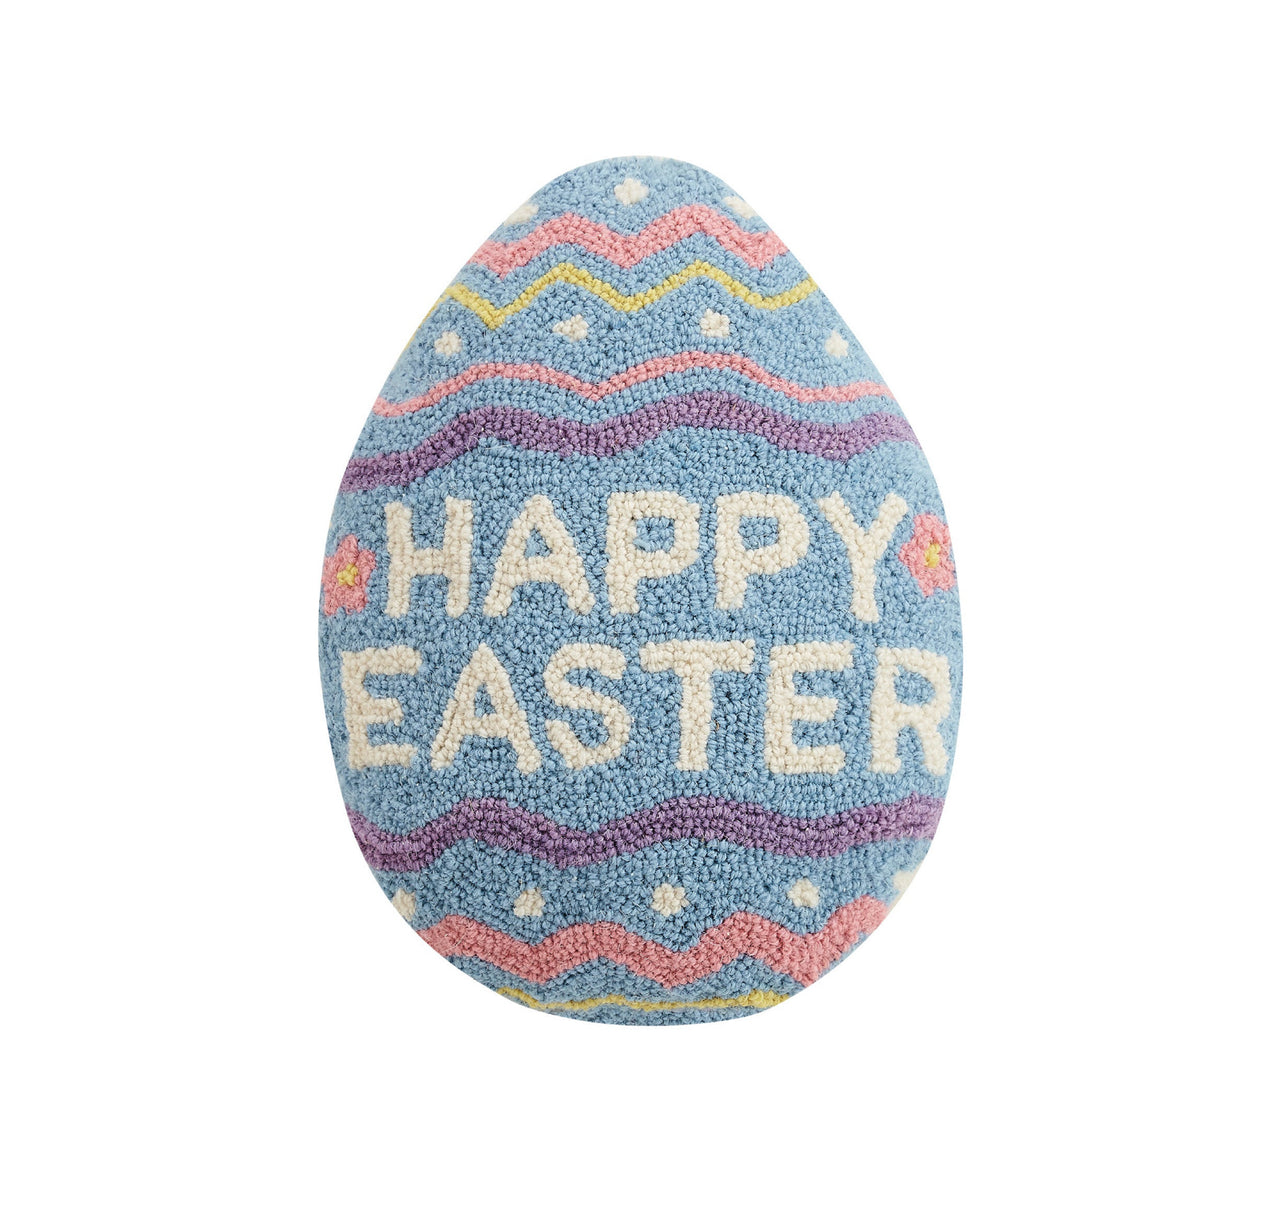 Happy Easter Egg Hook Pillow